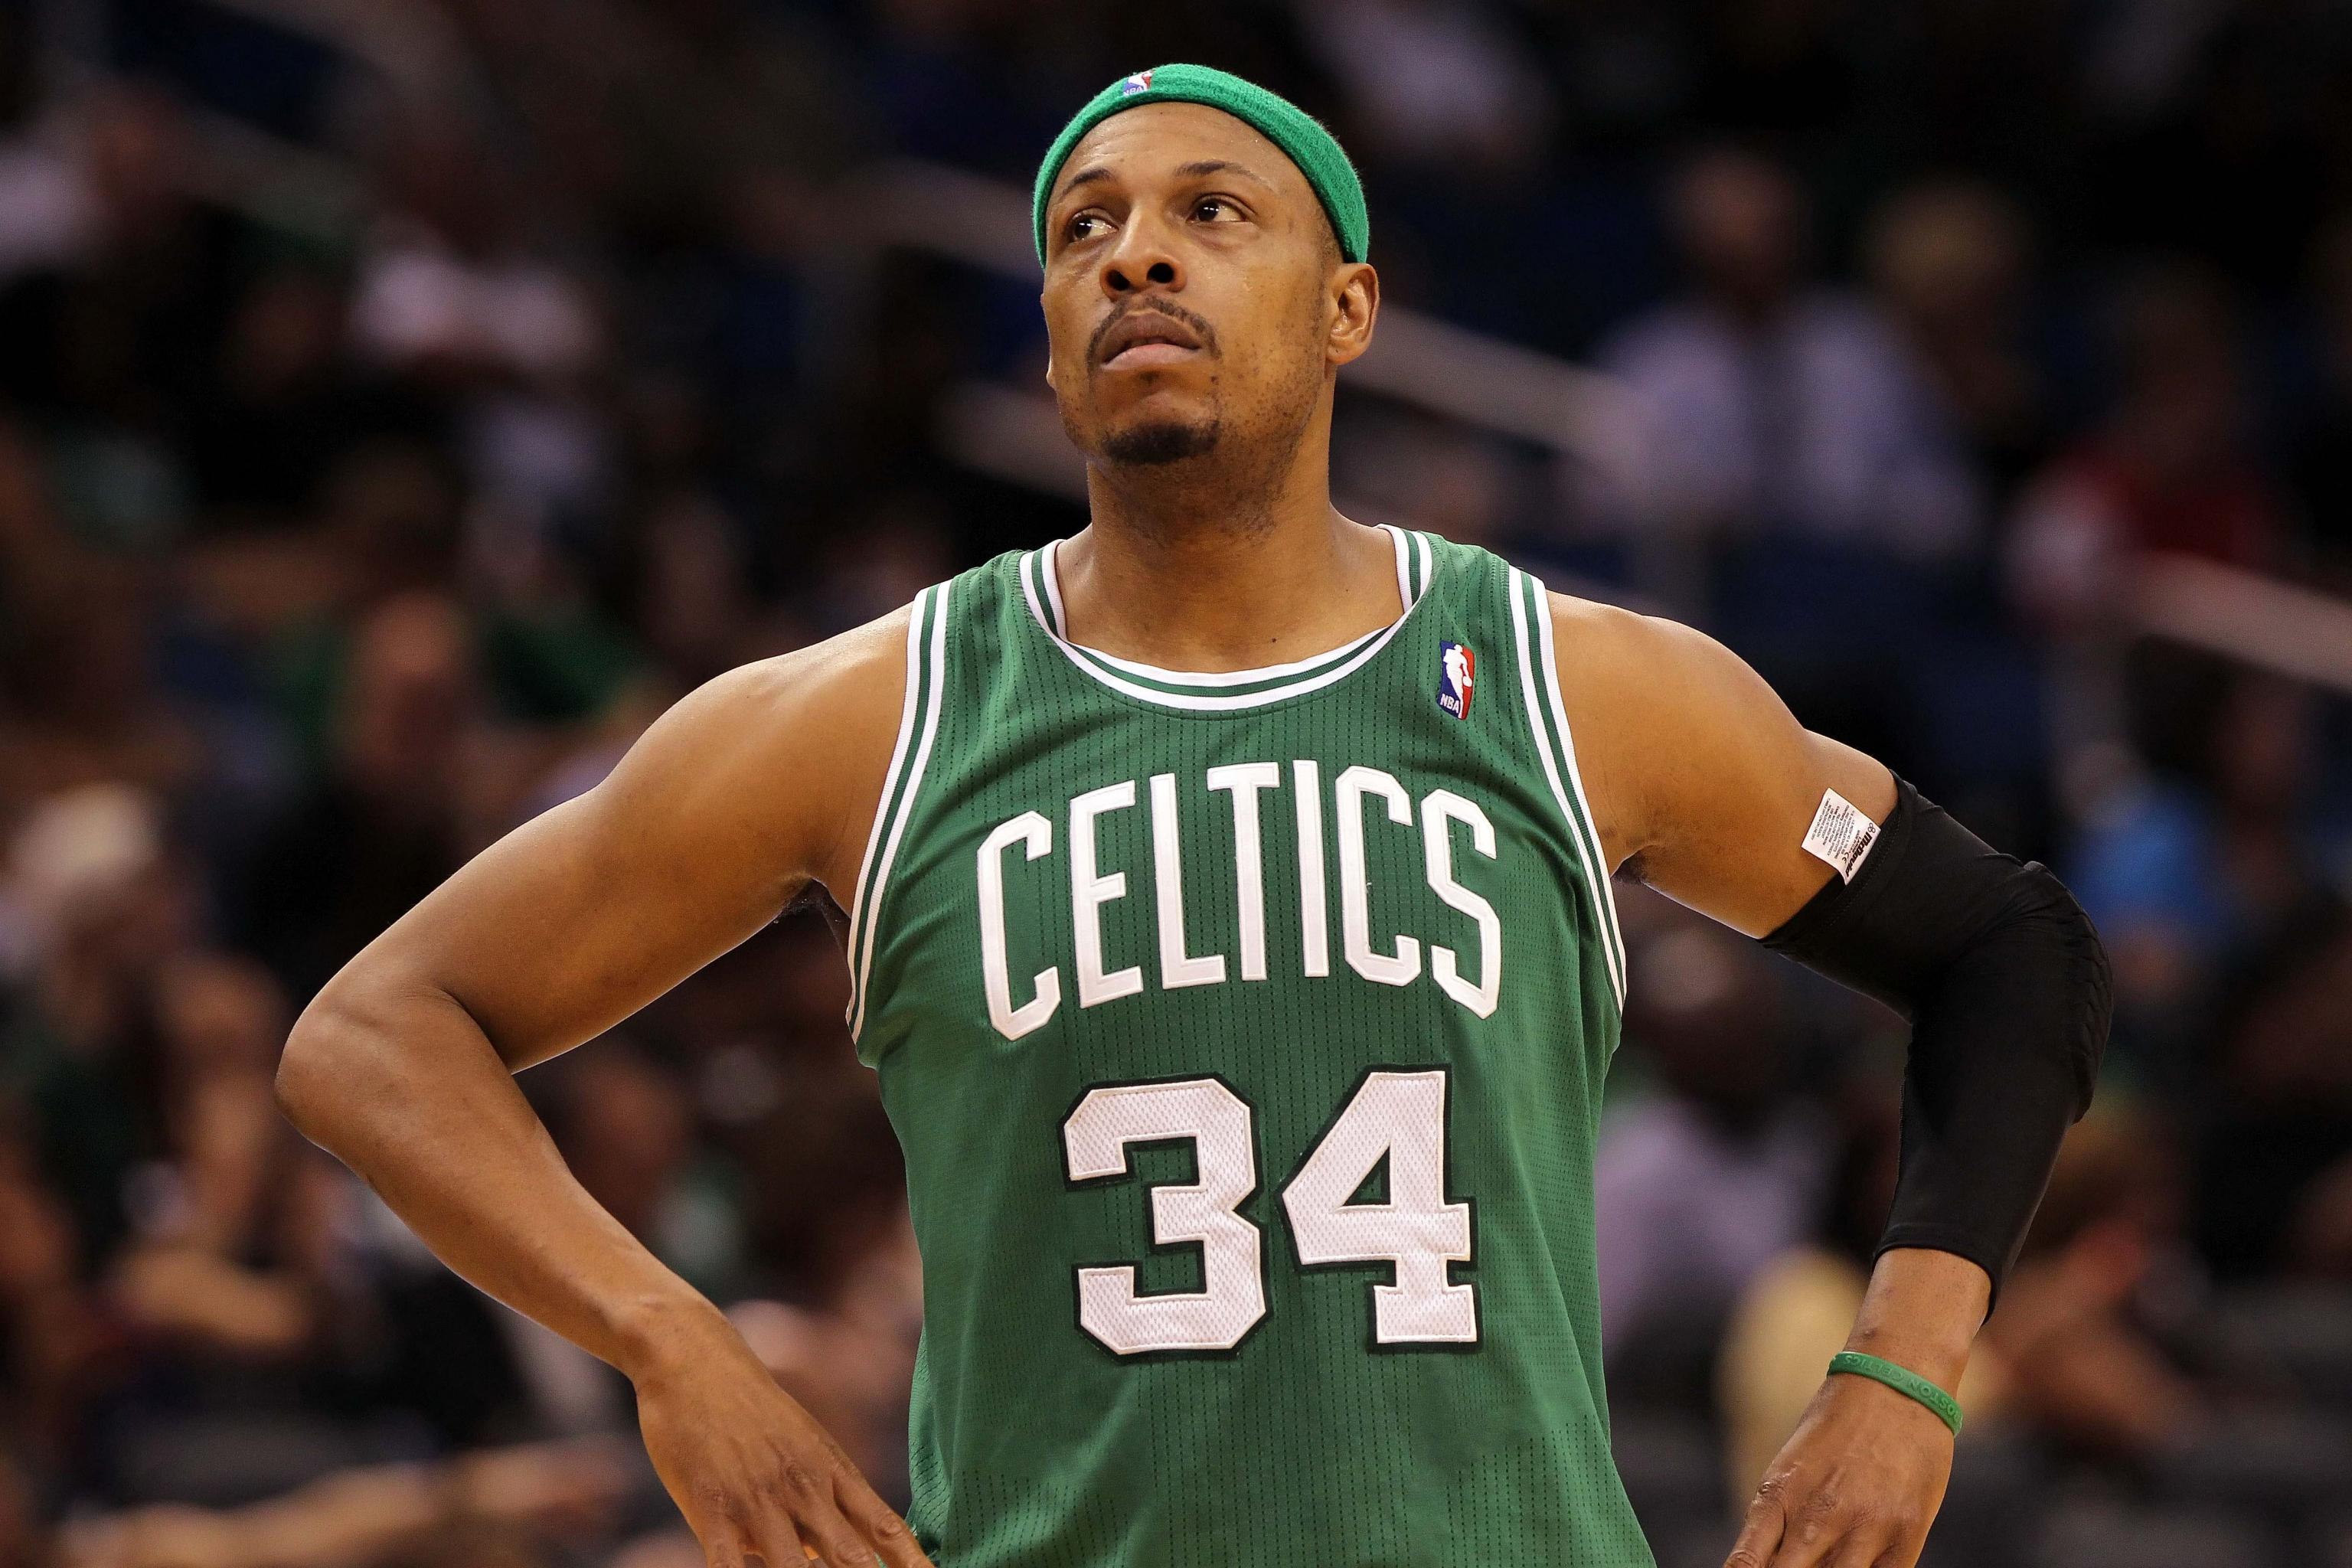 Did Celtics player pull a Paul Pierce during Summer League?